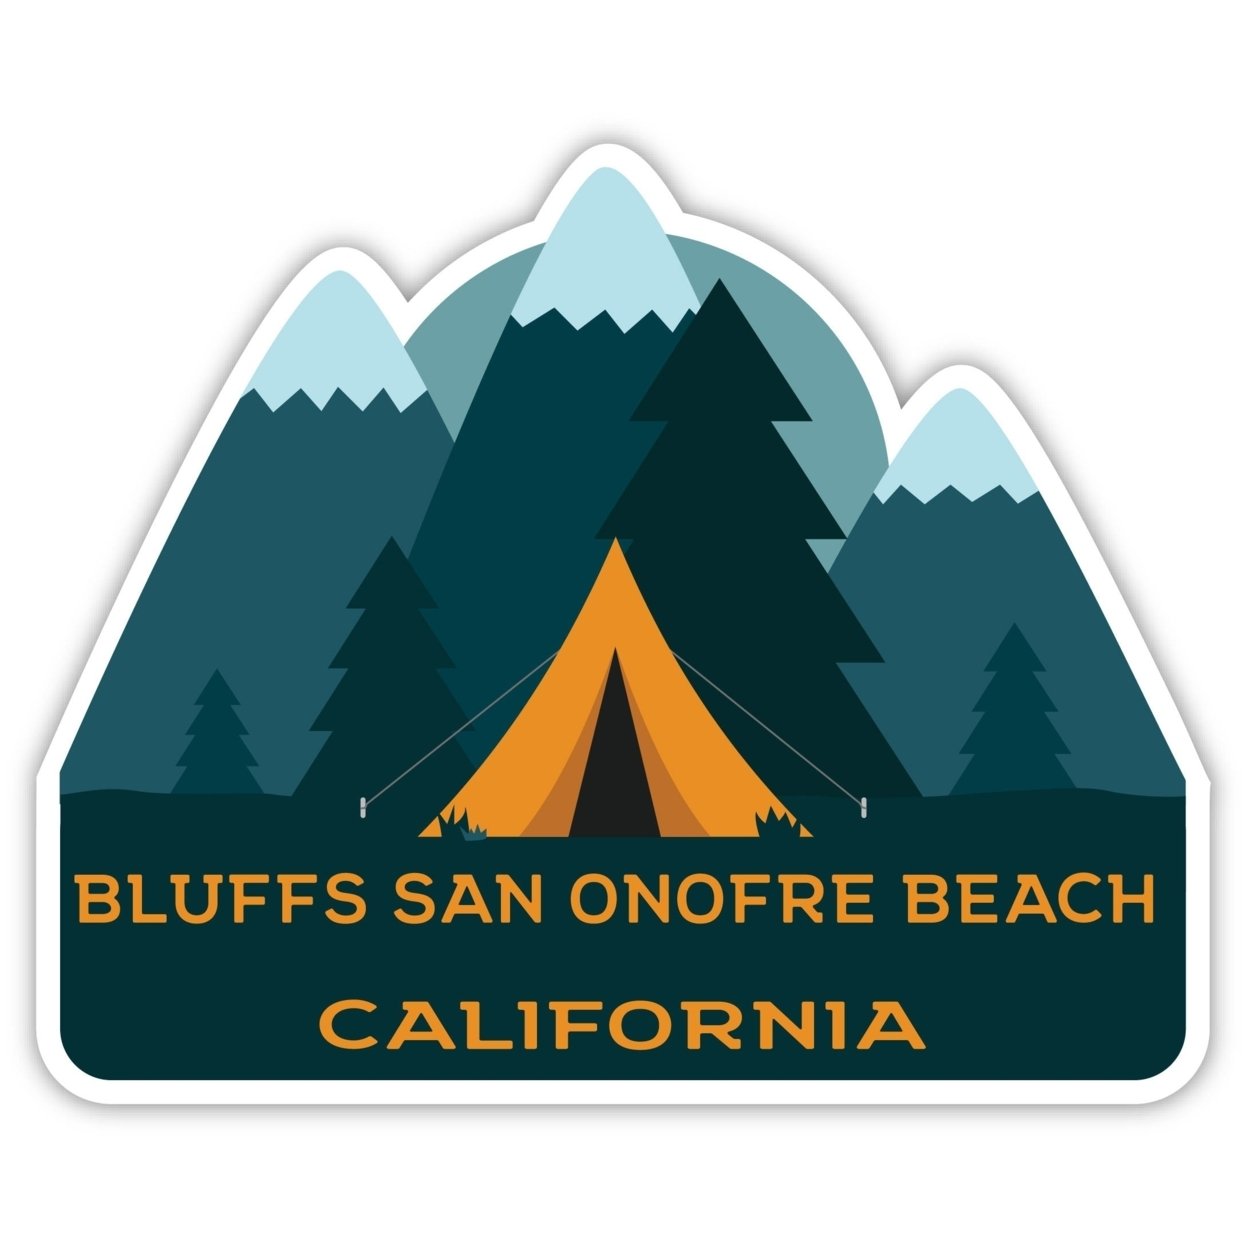 Bluffs San Onofre Beach California Souvenir Decorative Stickers (Choose Theme And Size) - Single Unit, 8-Inch, Adventures Awaits